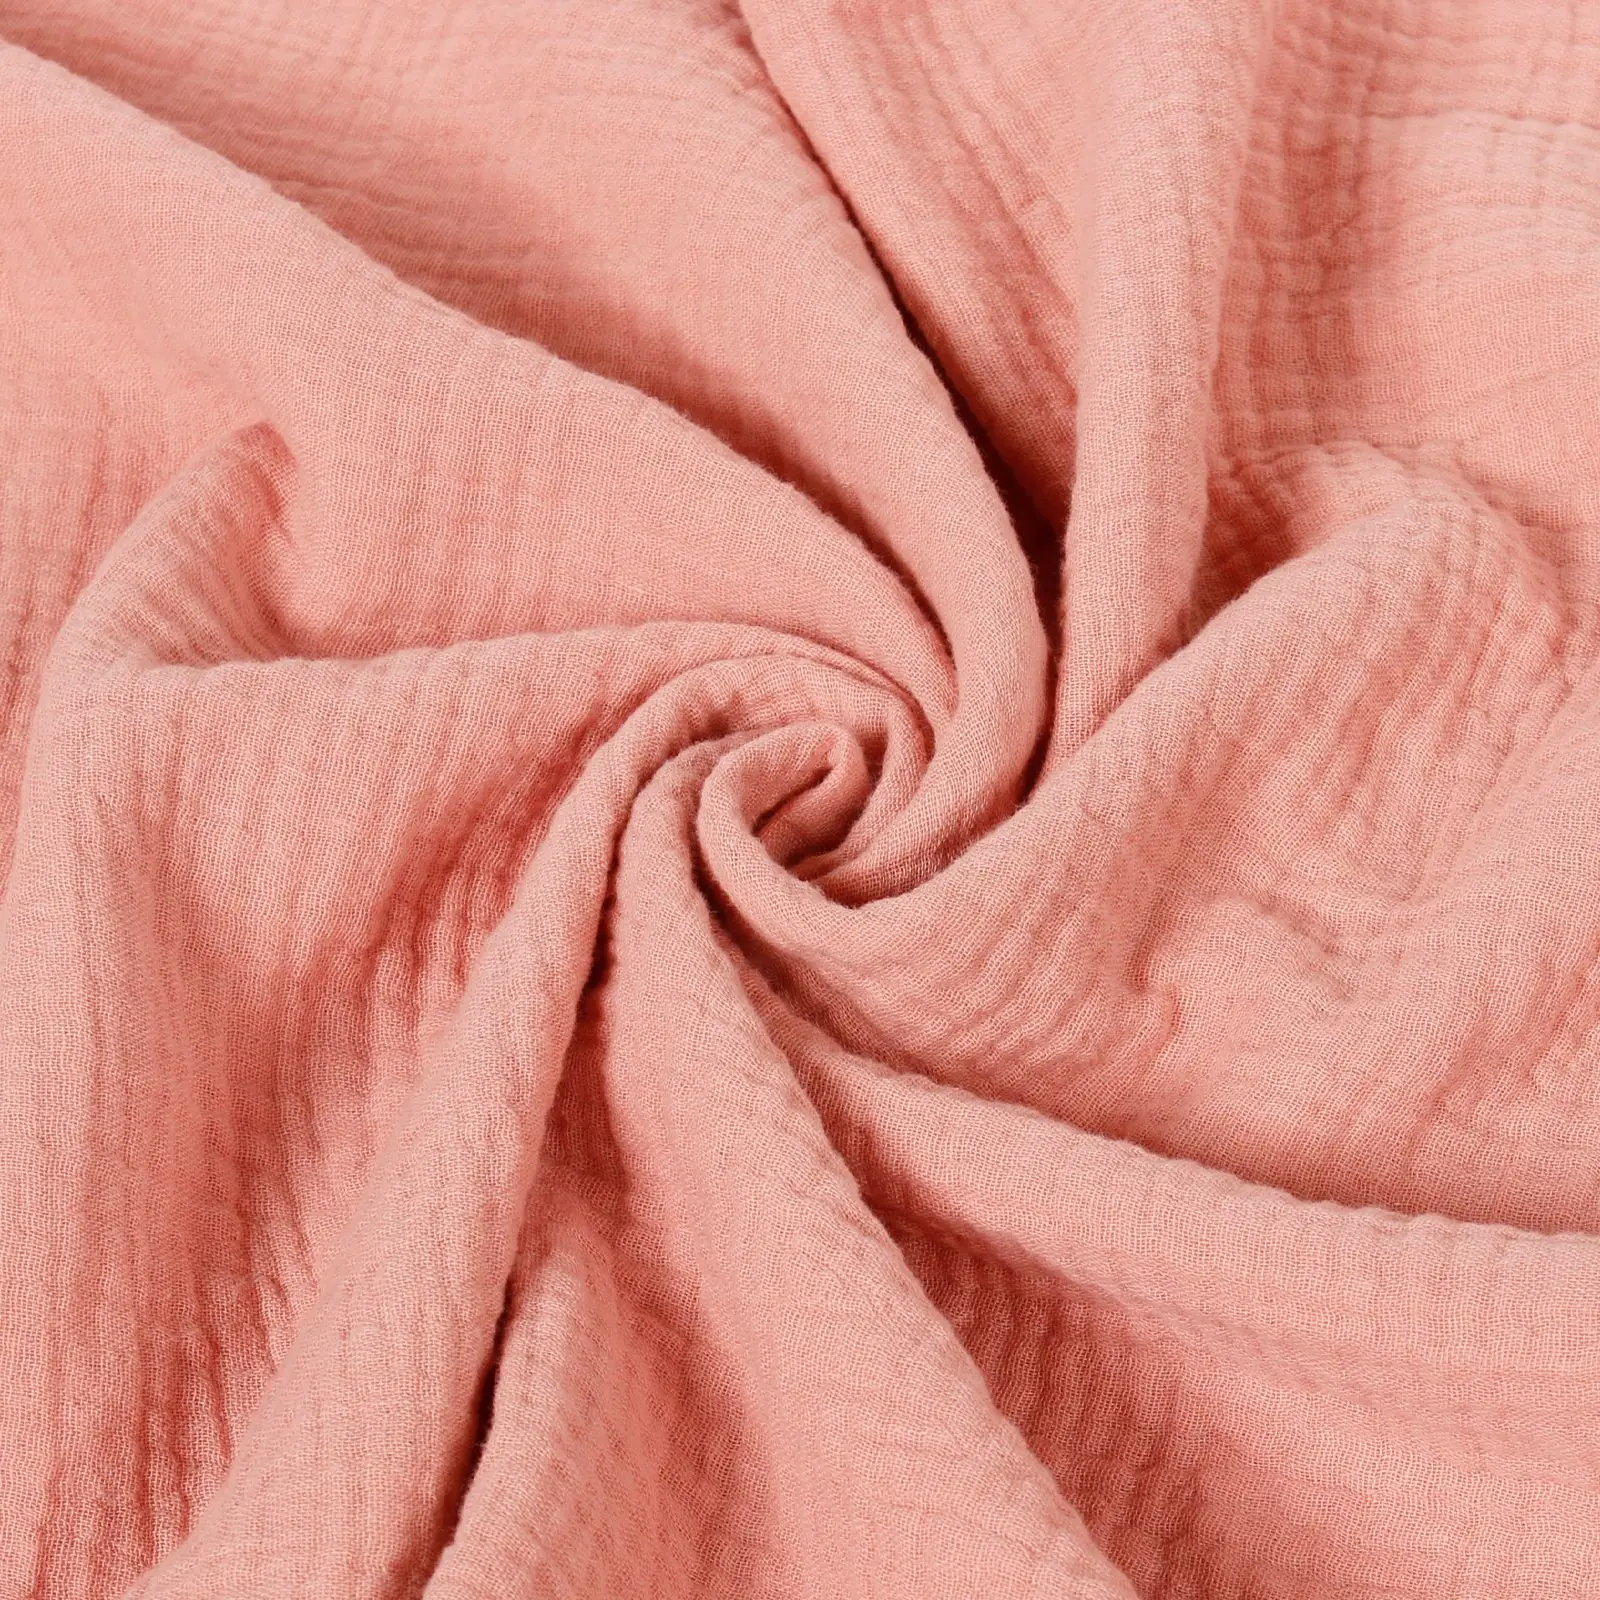 Muslin Swaddle Blanket Soft Breathable Cotton Baby Receiving Blanket Muslin Swaddling Wrap Neutral Receiving Blanket for Newborn